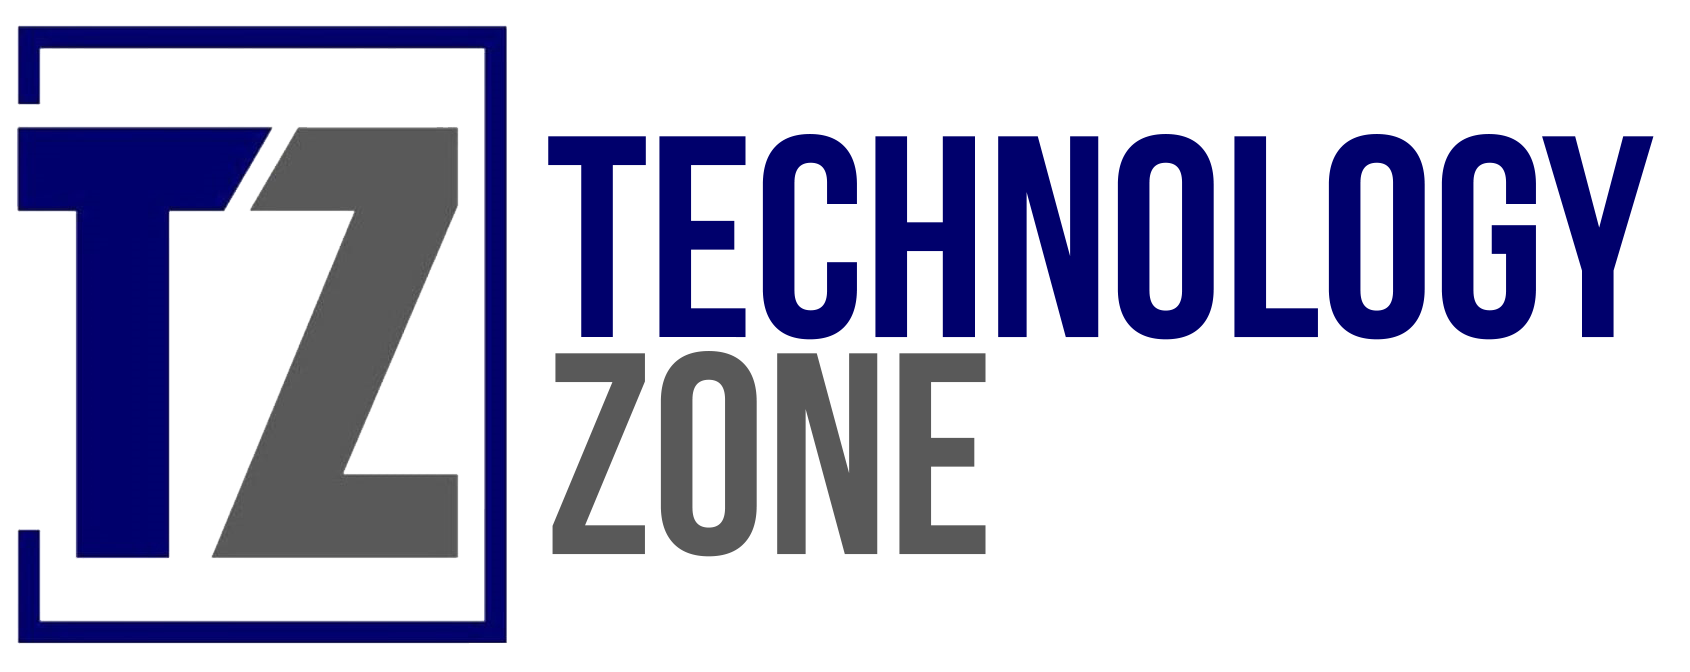 Techzone Apple Logo